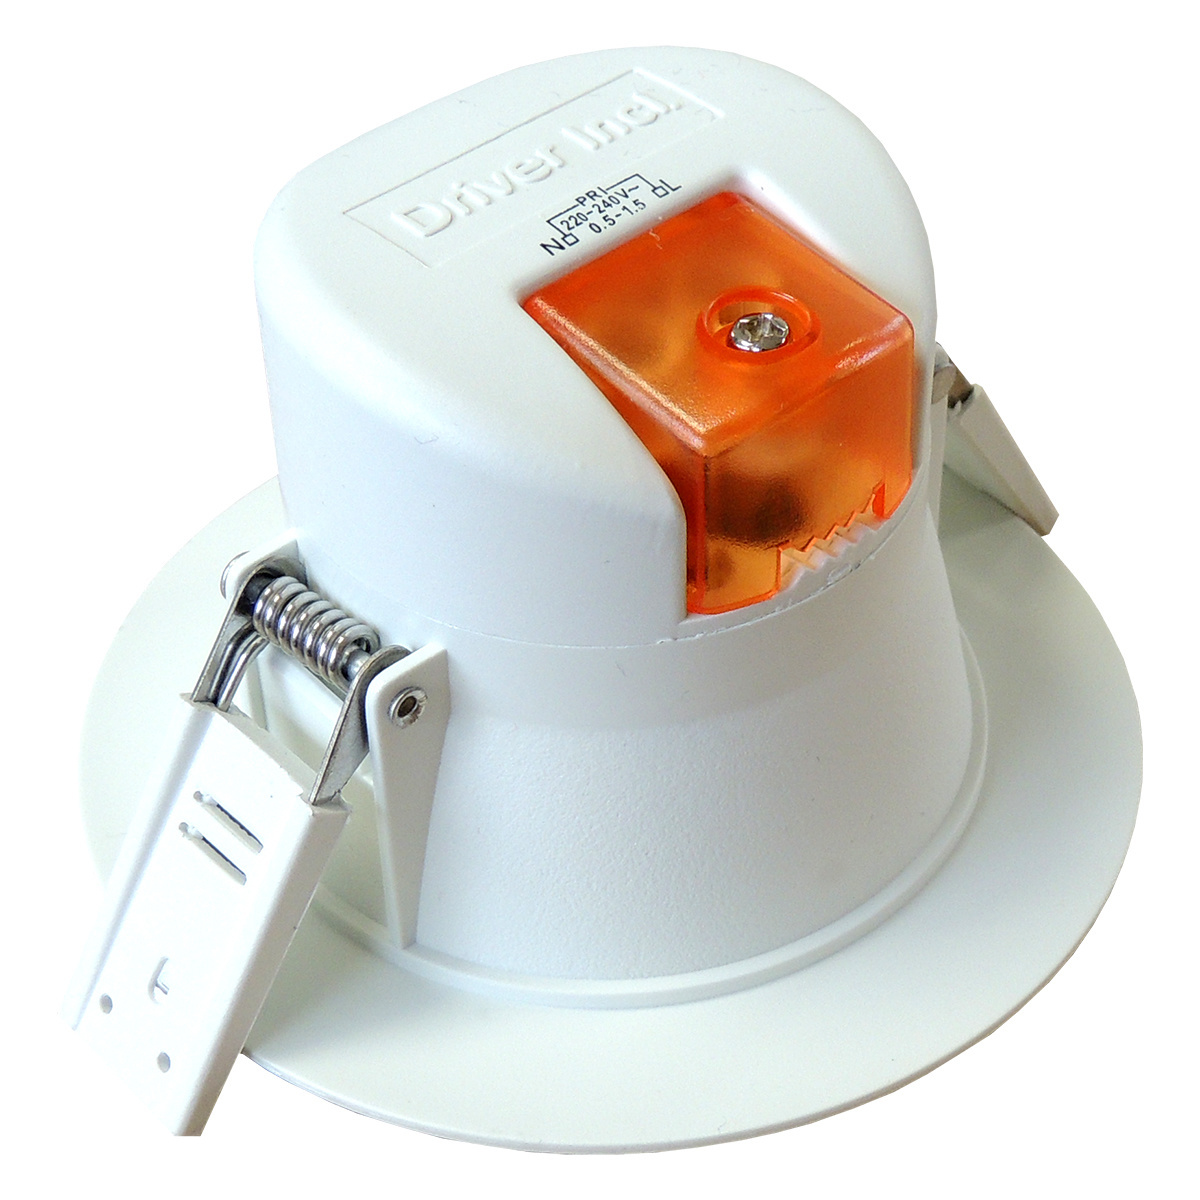 Bespreken compact Het formulier LED inbouwspot - 7W vervangt 55W - 3000K warm wit licht -  Ledpanelendiscounter.nl